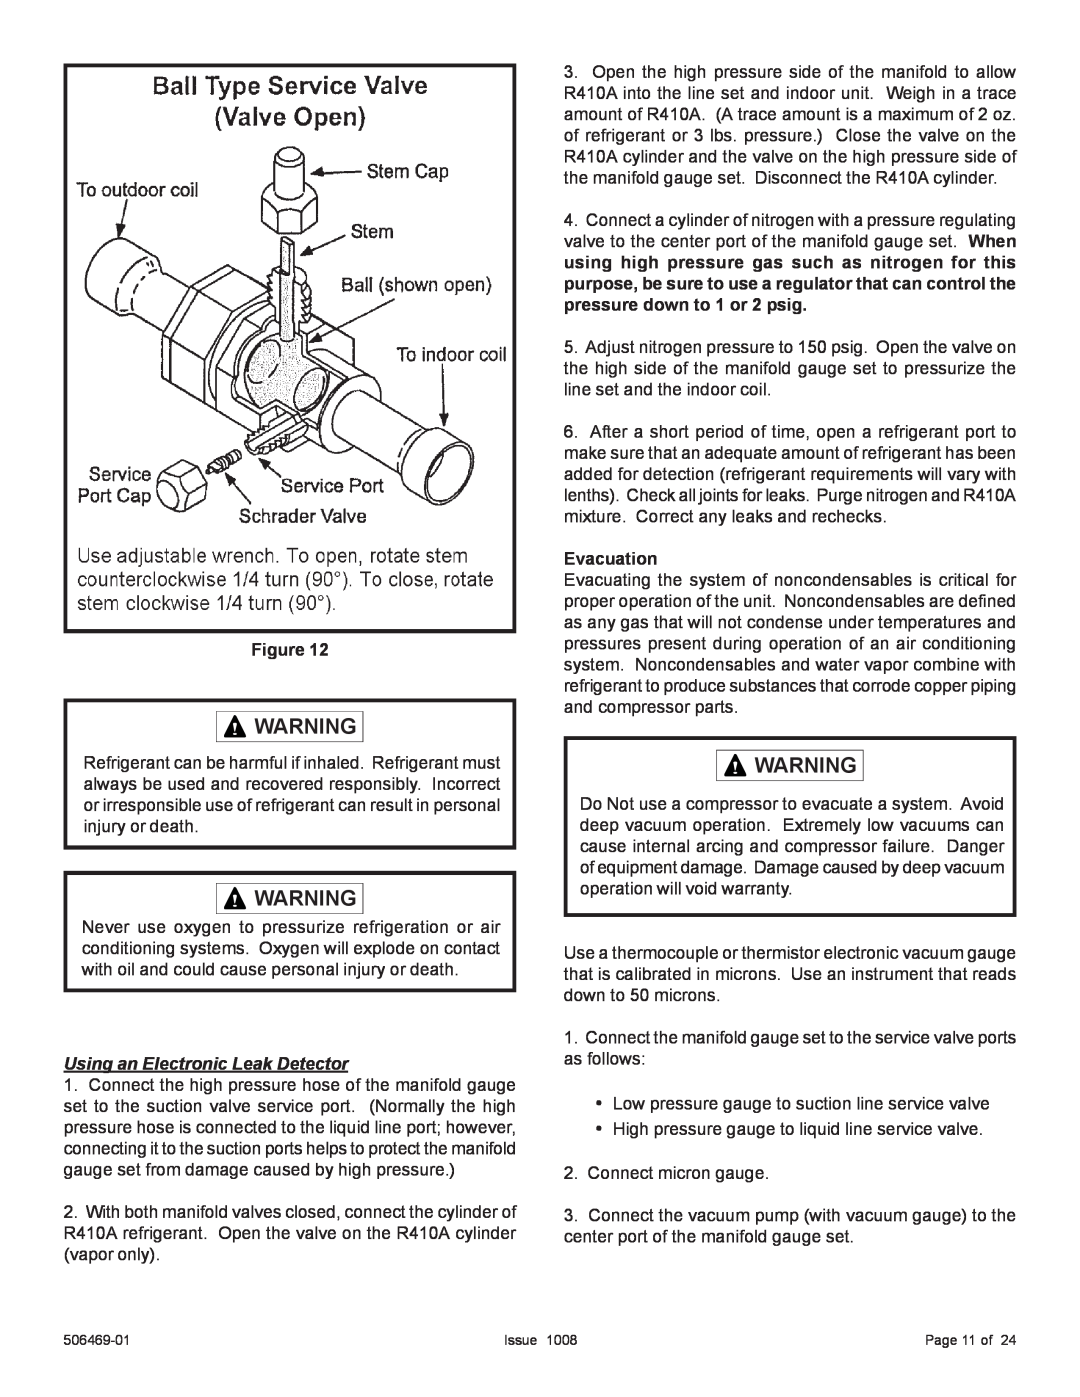 Allied Air Enterprises 4AC18LT manual Using an Electronic Leak Detector, Evacuation 